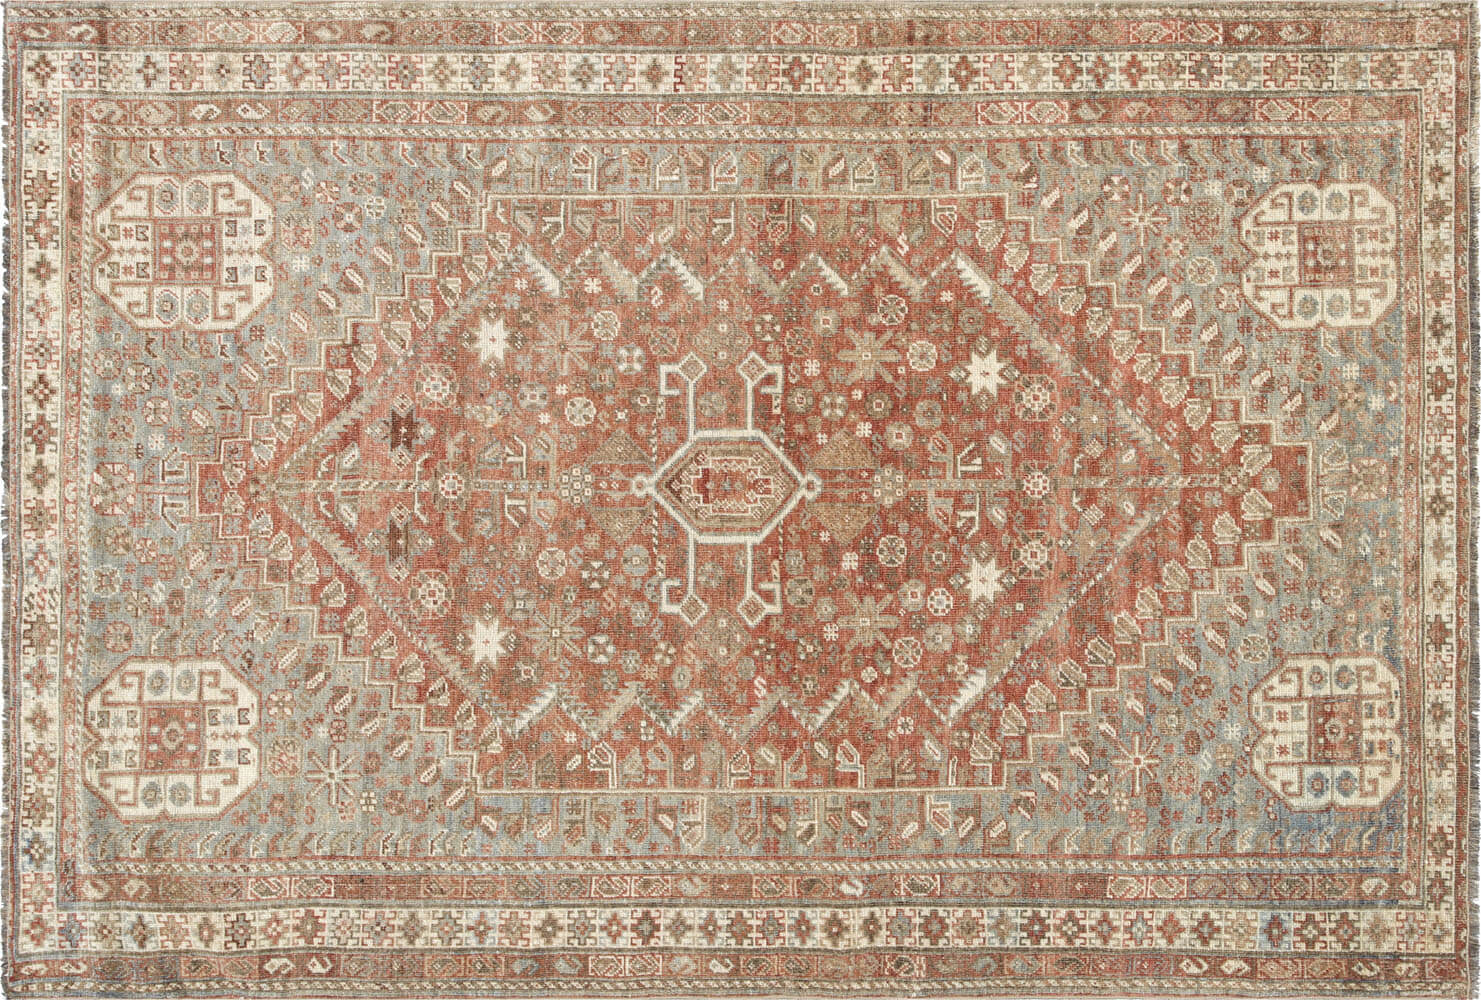 Antique Persian Shiraz Rug - 4'11" x 7'2"